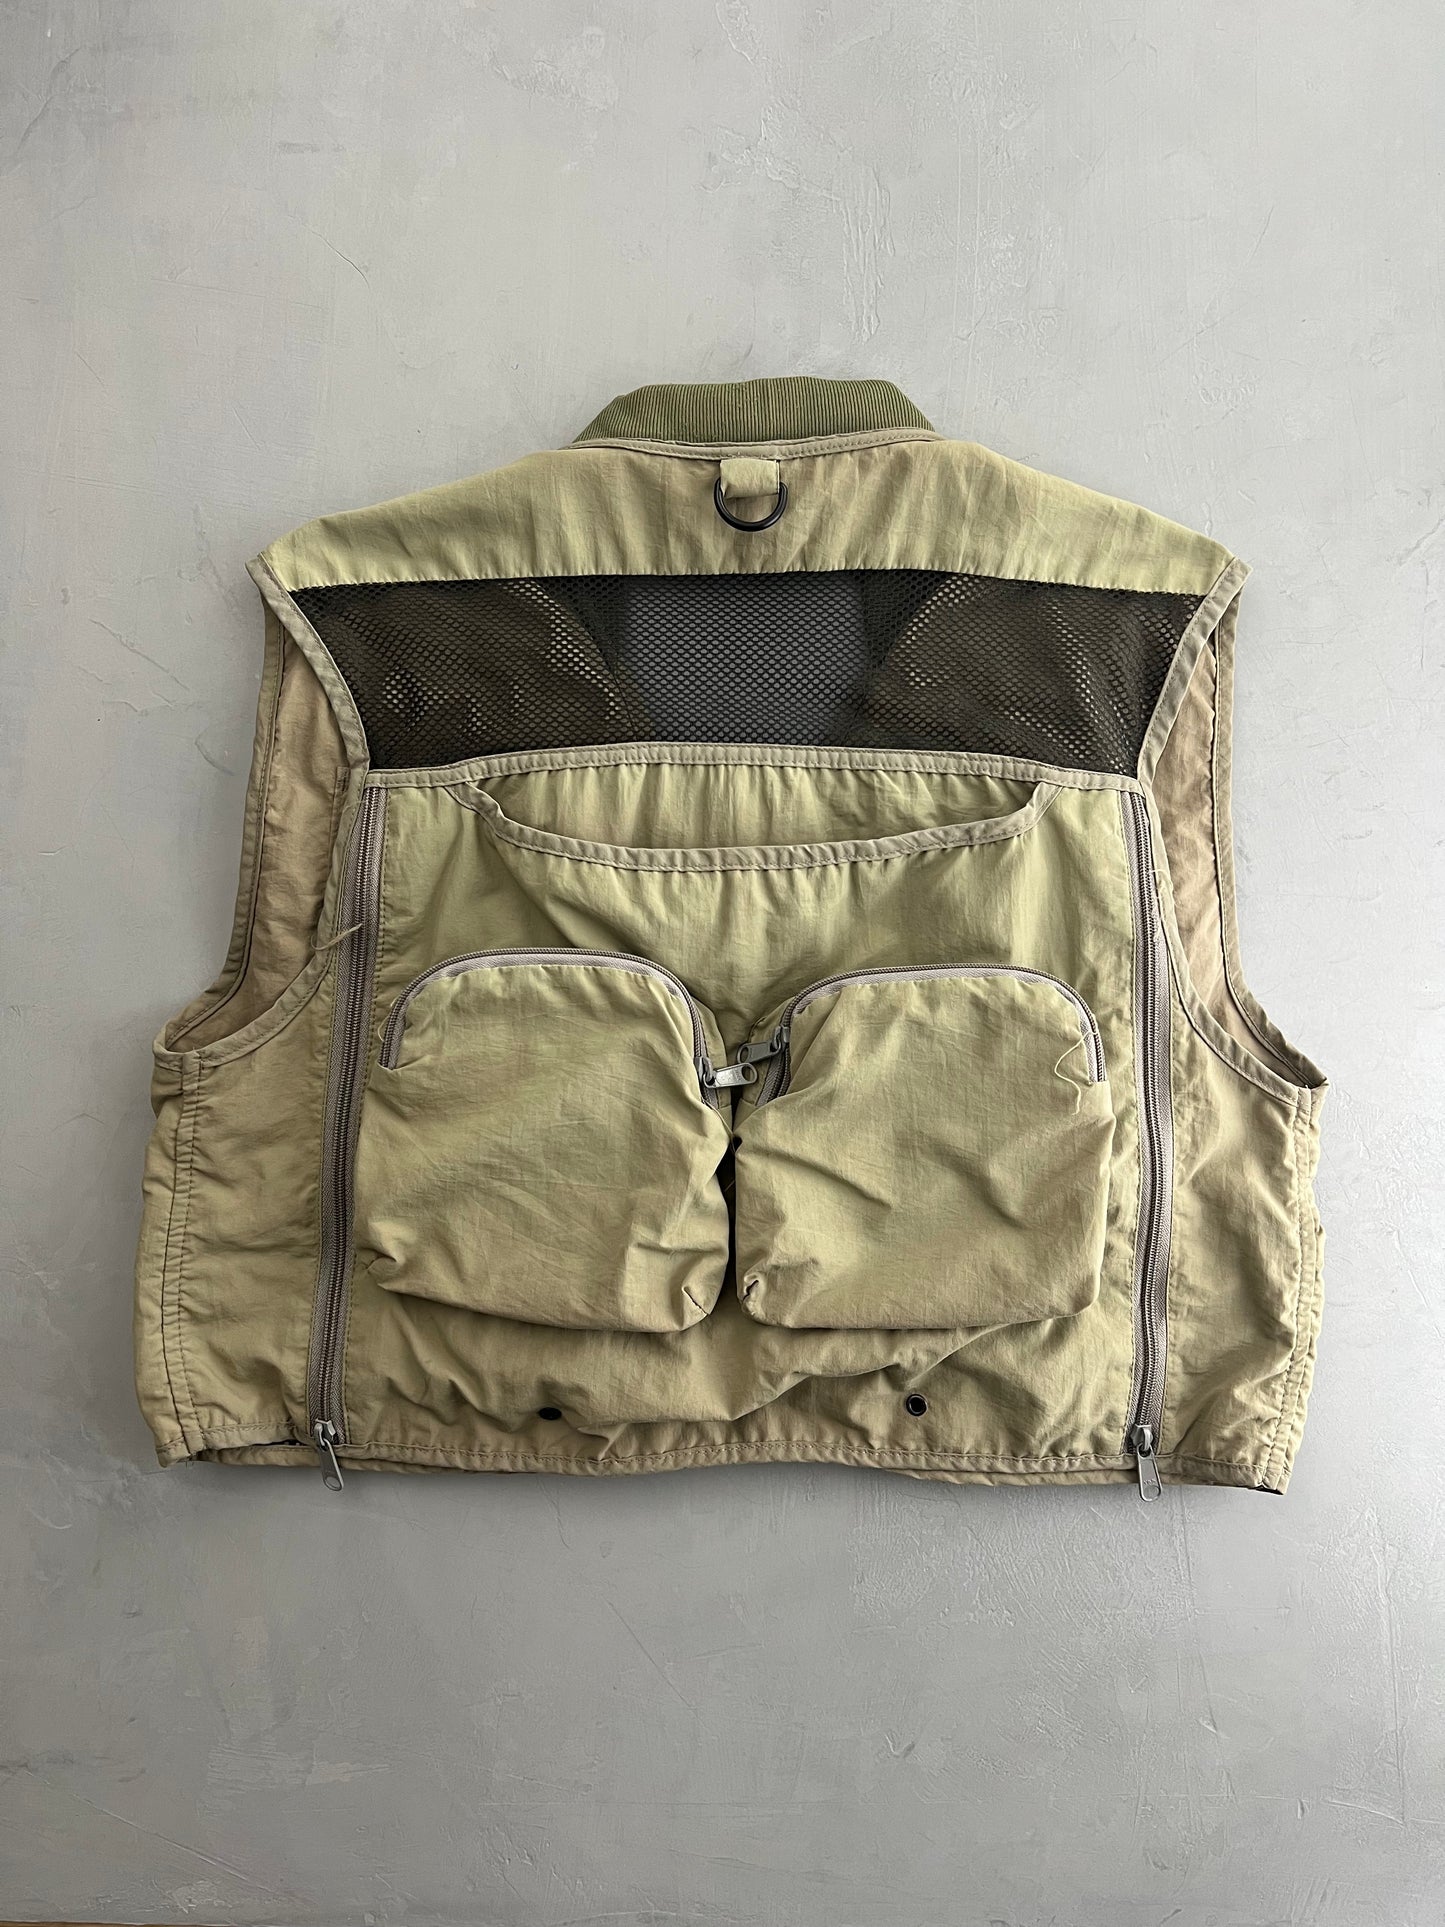 Orvis Fishing Vest [S]